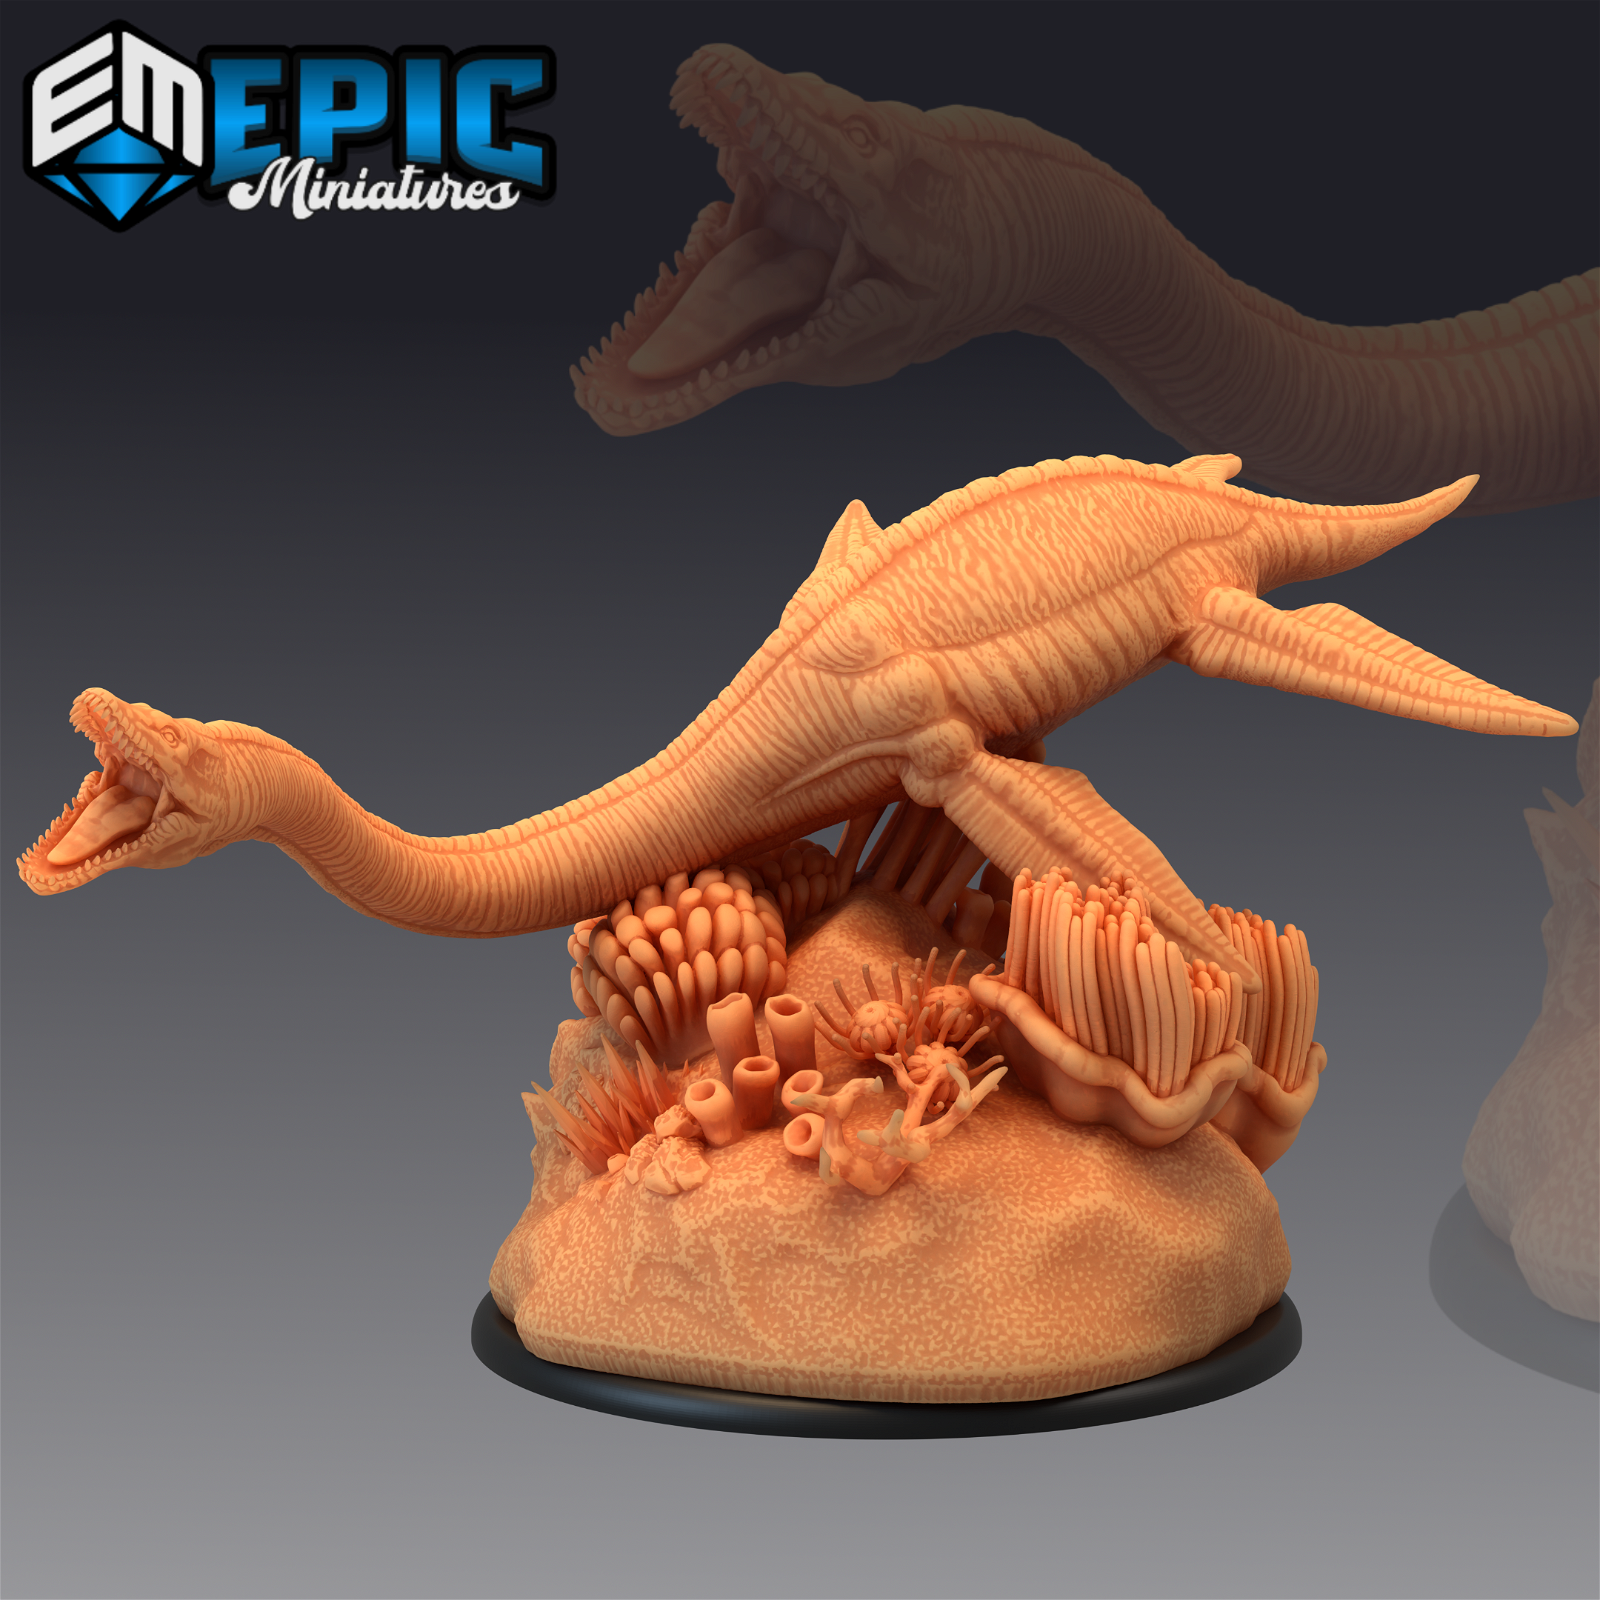 Pleasiosaurus - The Printable Dragon